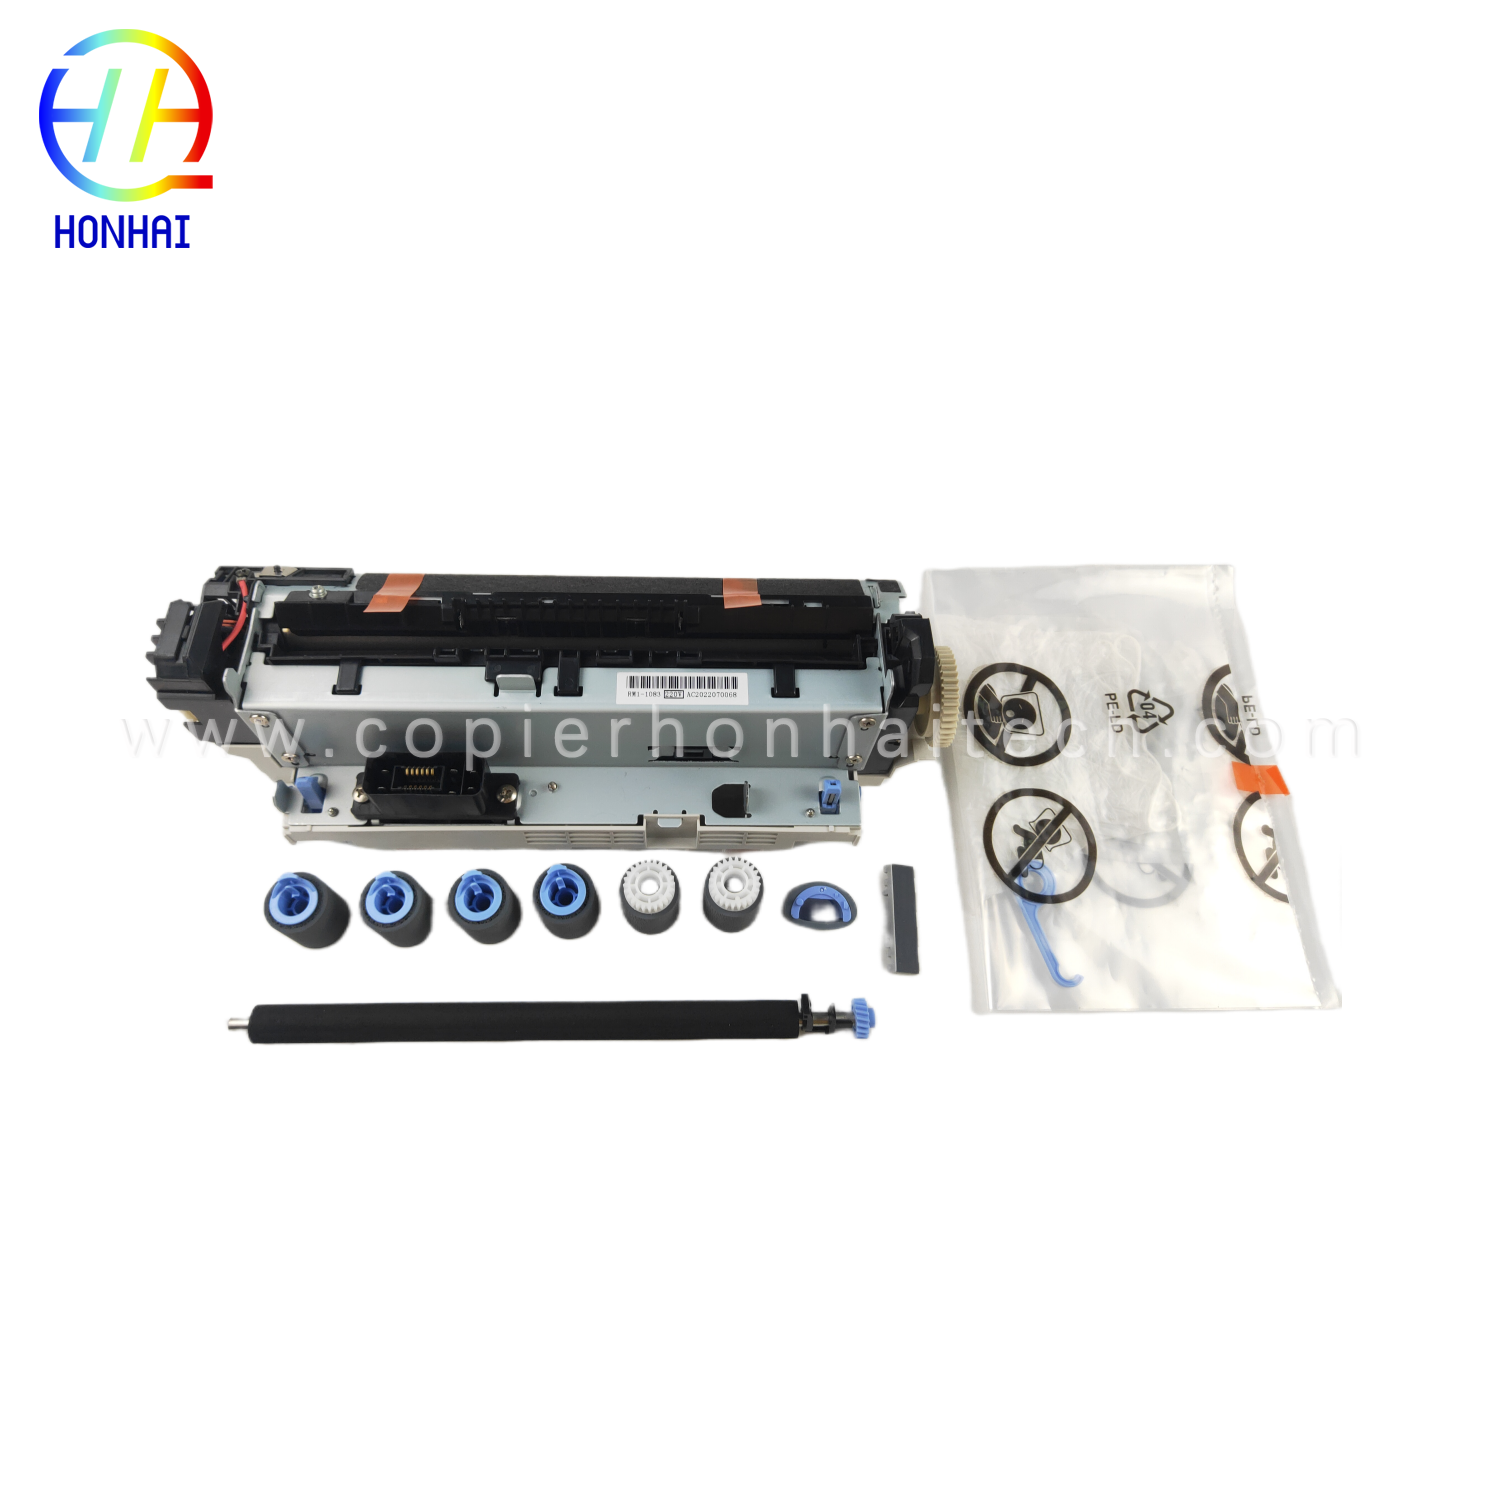 https://www.copierhonhaitech.com/maintenance-kit-220v-imported-brand-new-for-hp-laserjet-4250-4350-rm1-1083-000-ምርት/